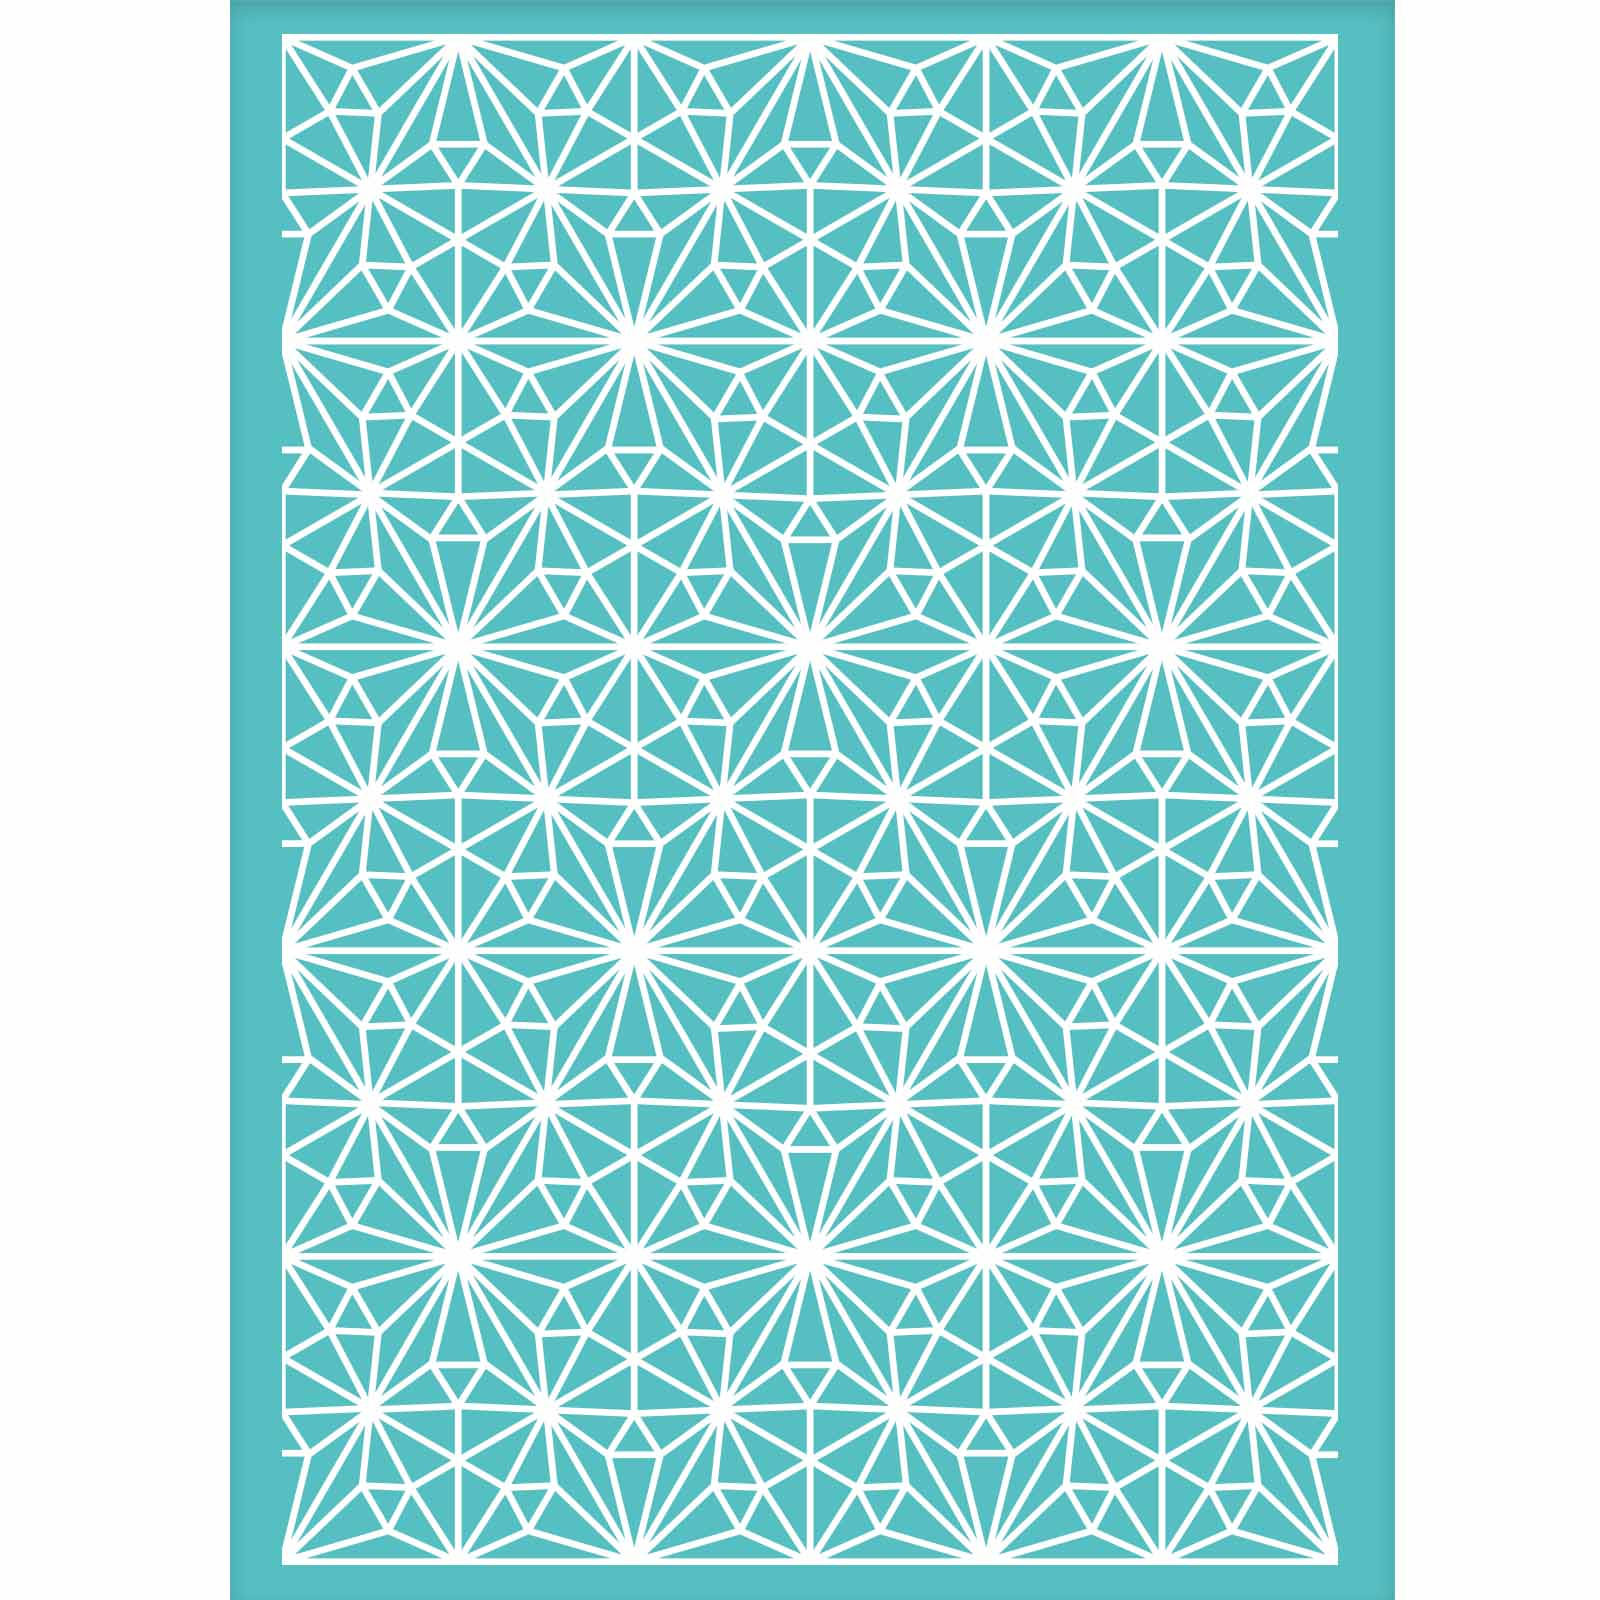 Globleland Self-Adhesive Silk Screen Printing Stencil, for Painting on Wood, DIY Decoration T-Shirt Fabric, Turquoise, Diamond Pattern, 195x140mm